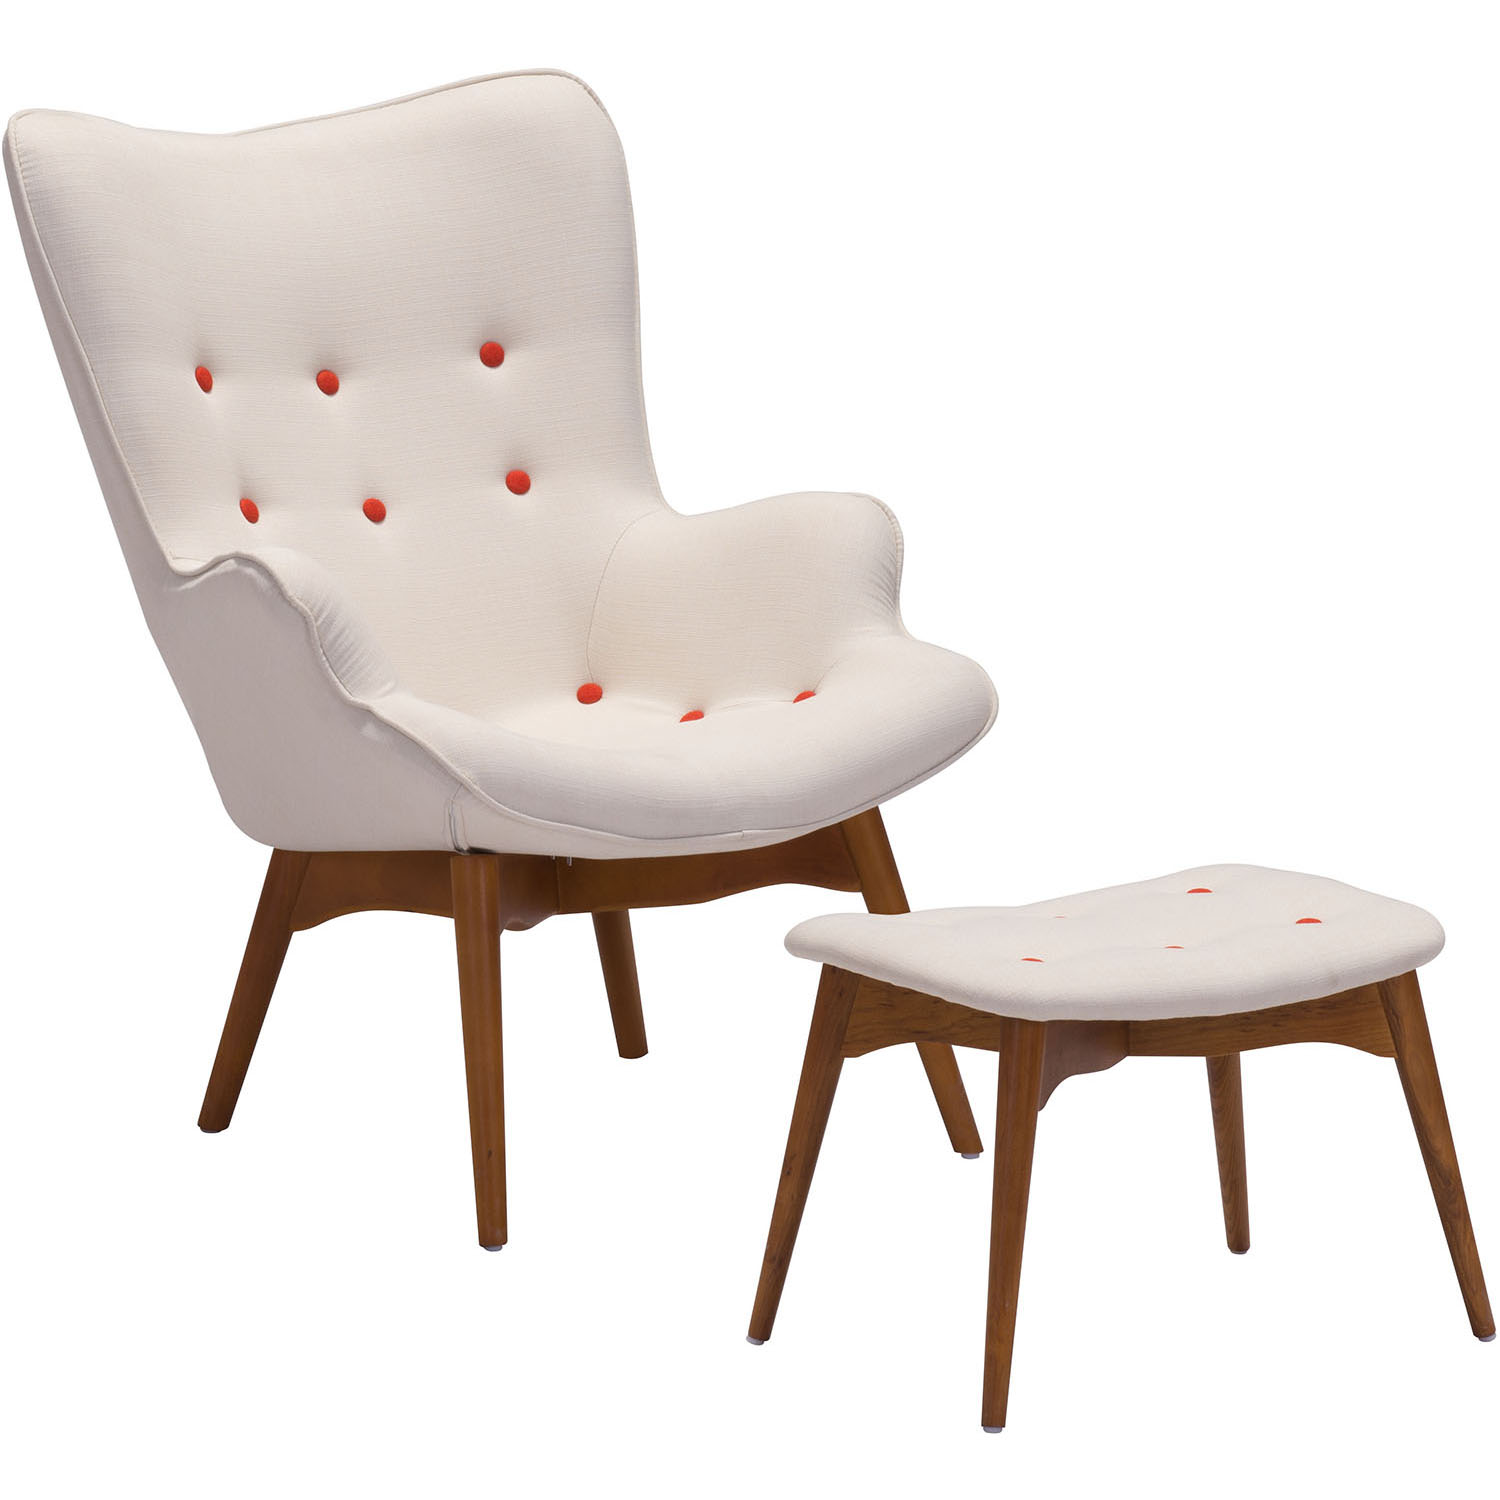 Zuo Modern Chair and Ottoman